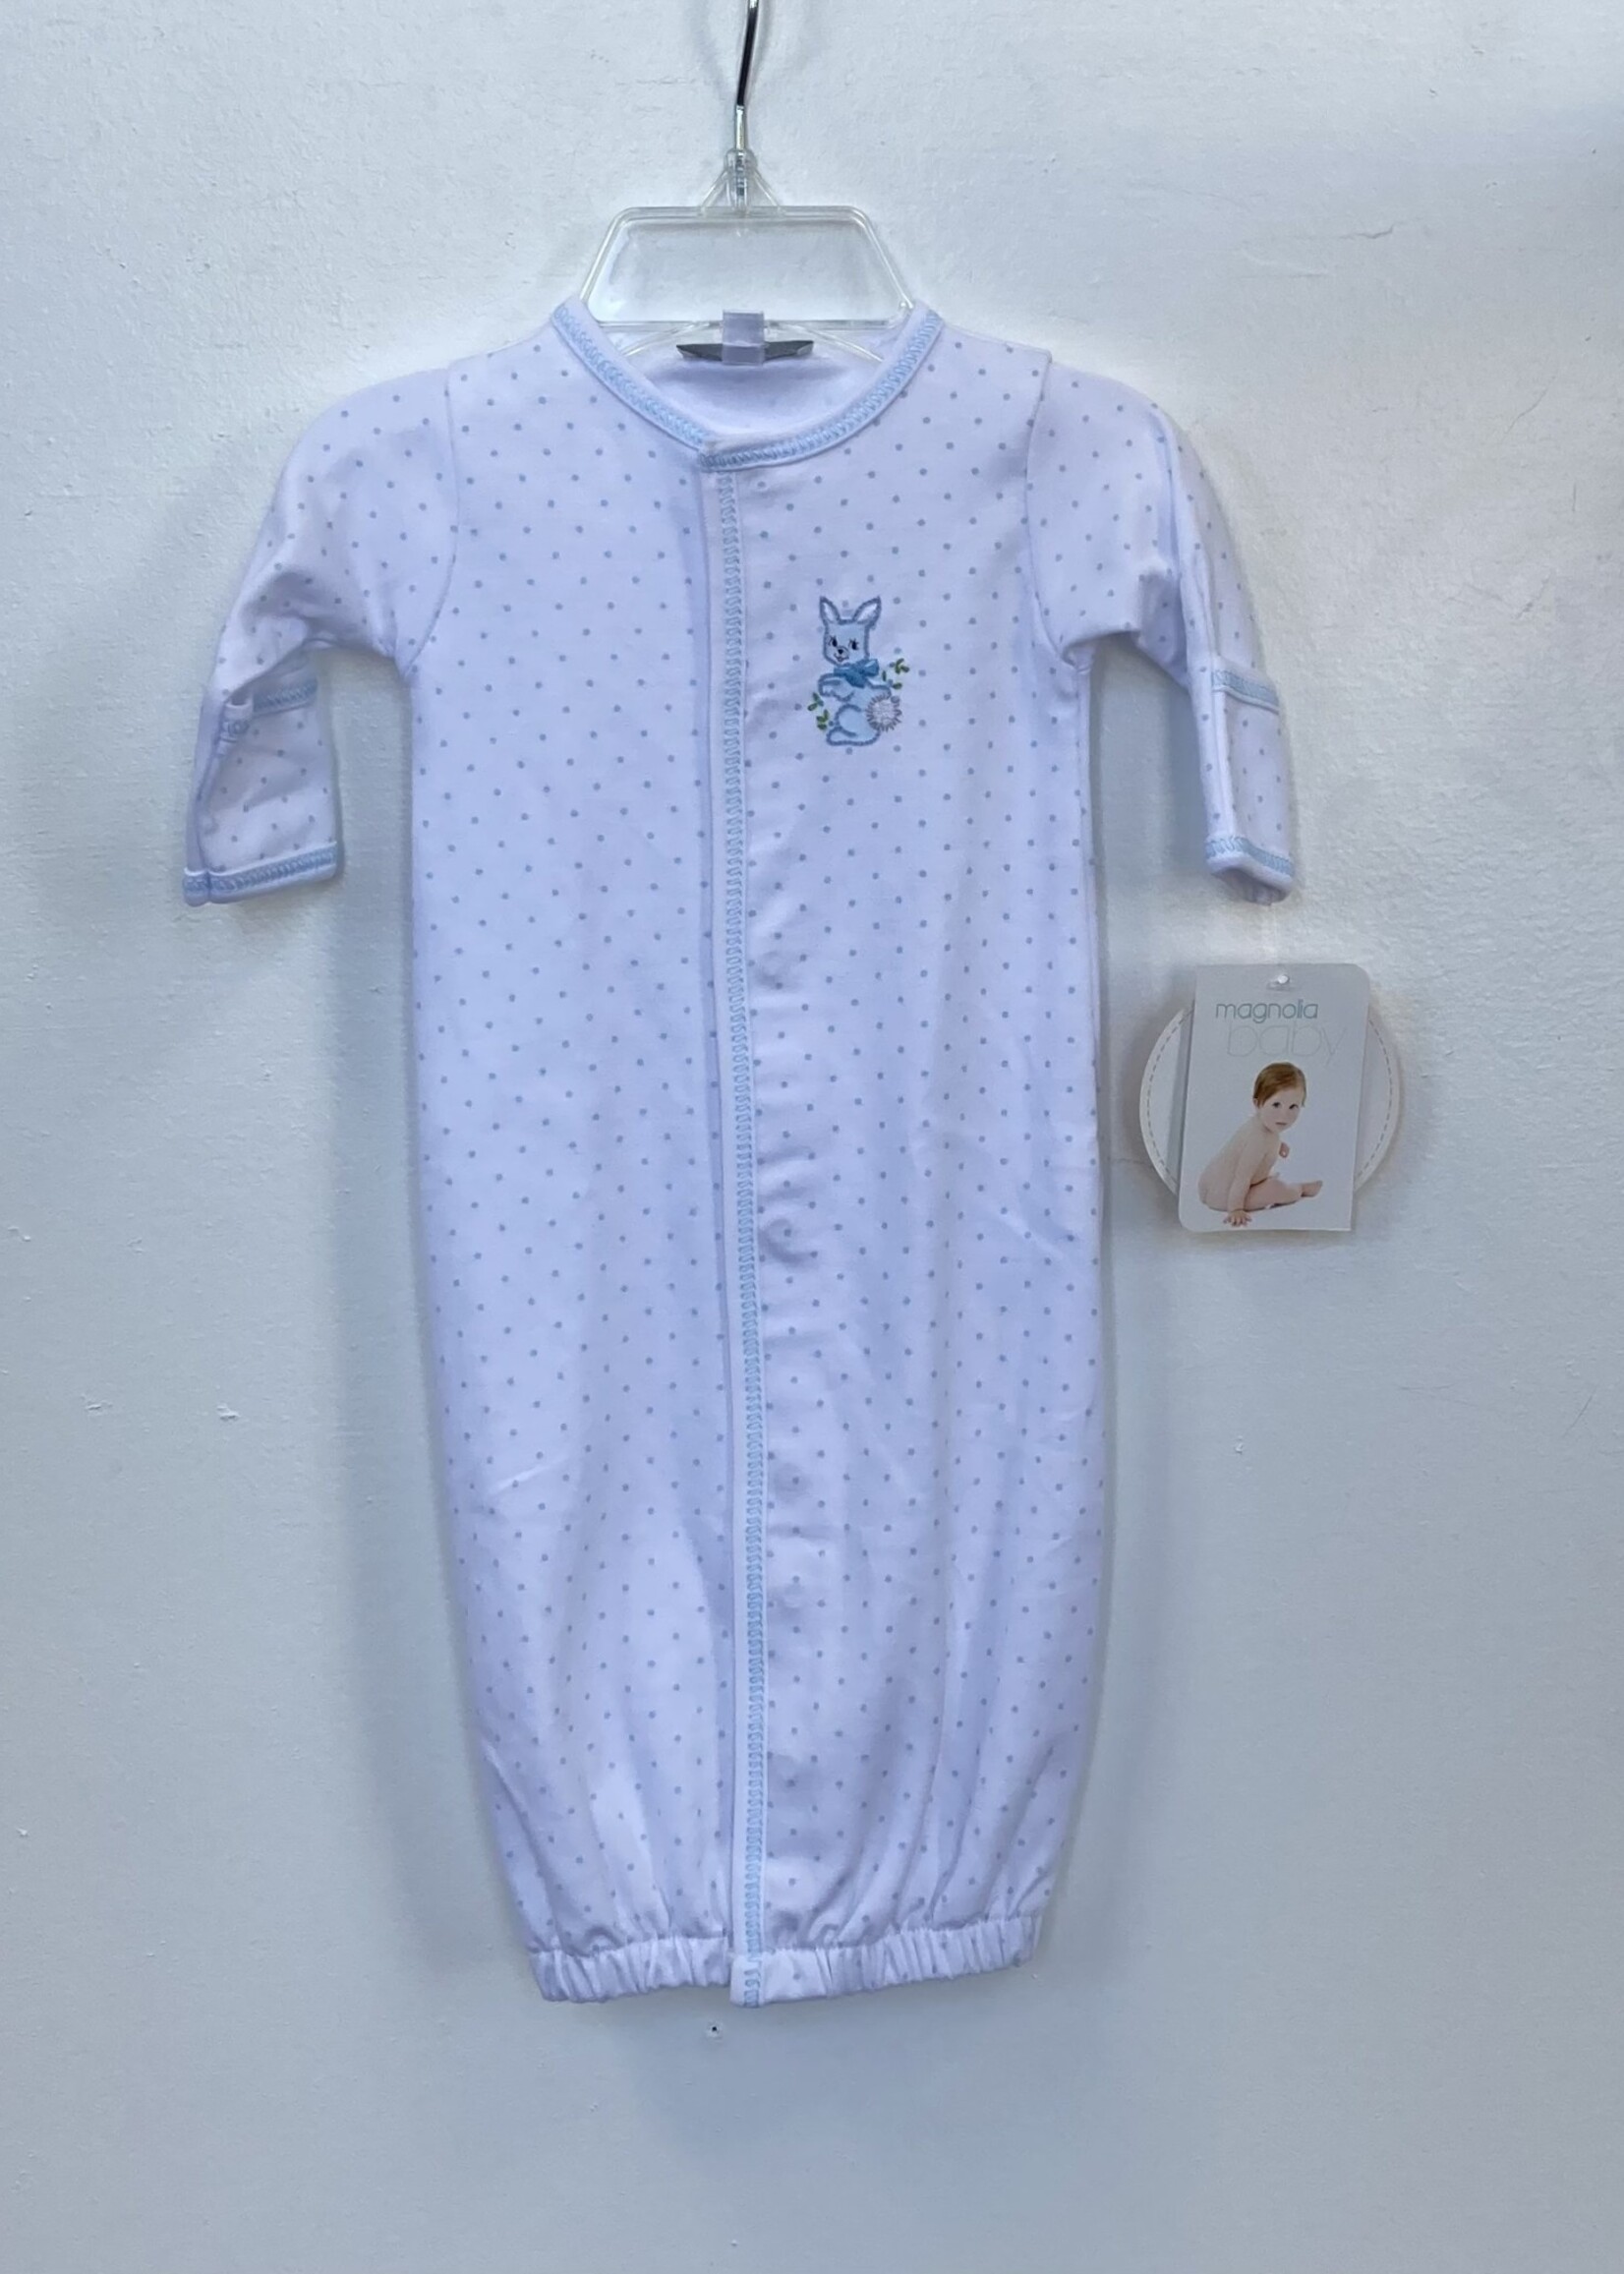 Magnolia Baby Blue Dot Gown w/Bunny Applique NB